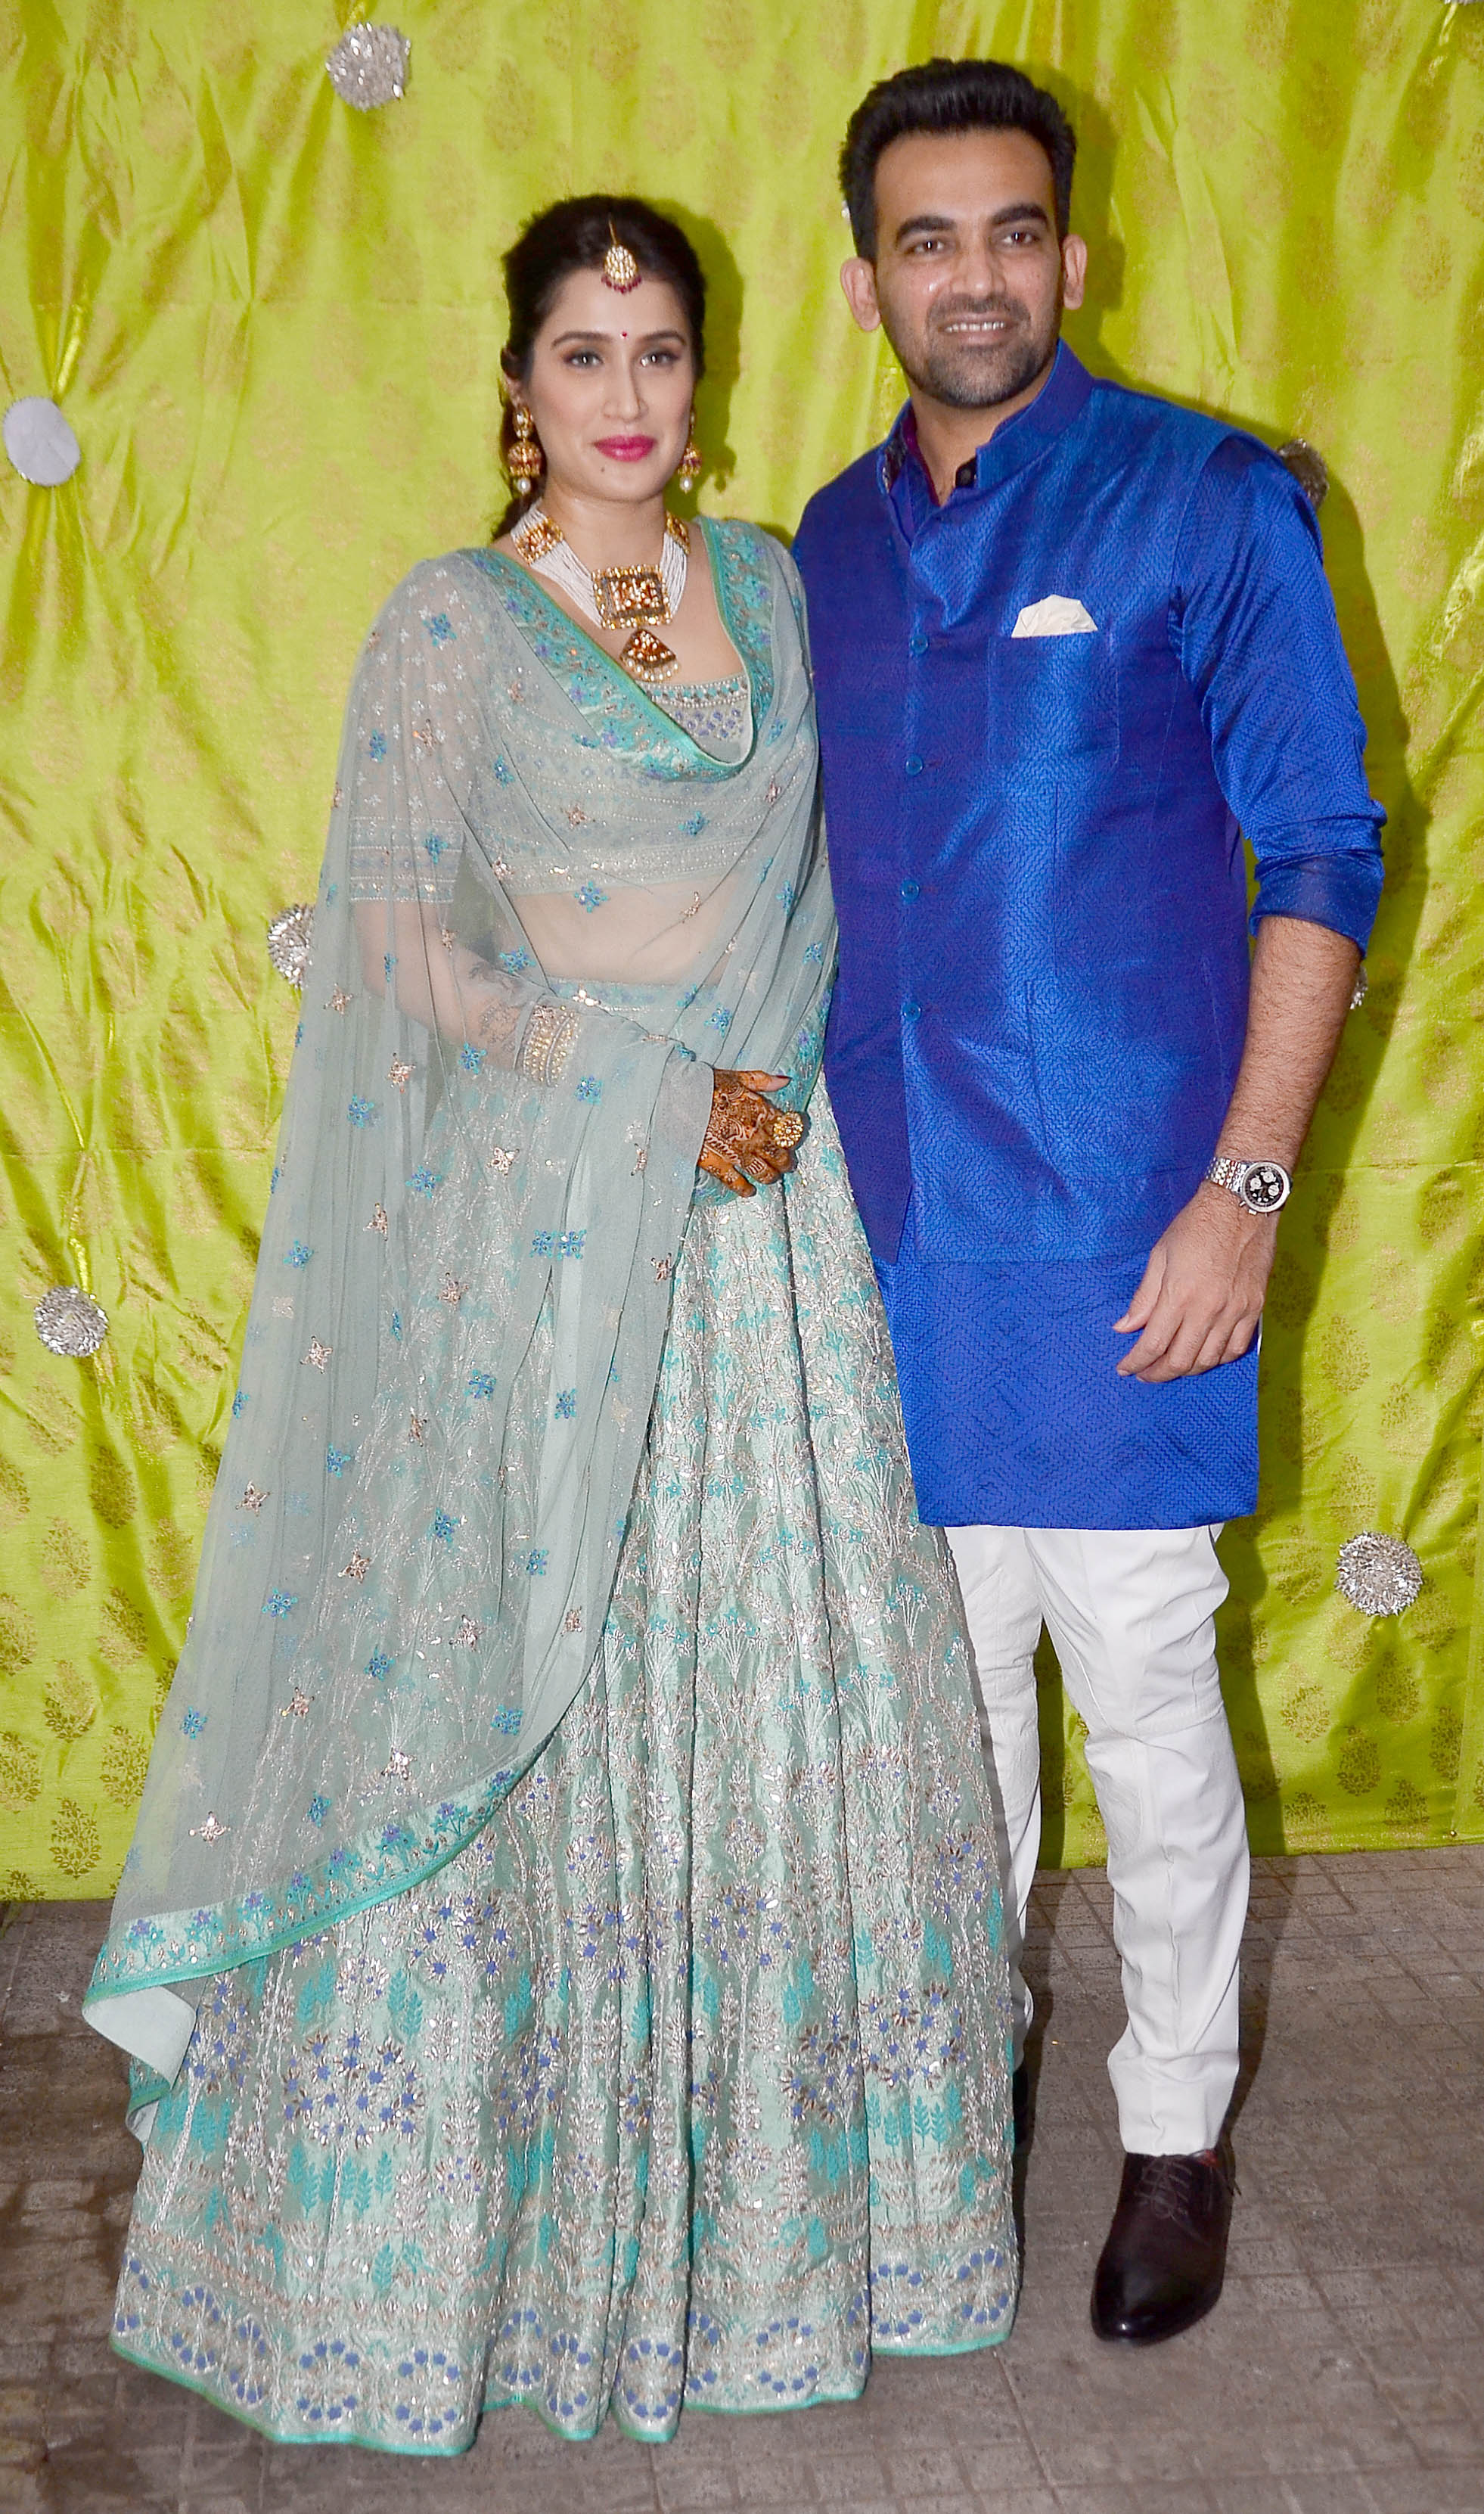 Sagarika Ghatge and Zaheer Khan